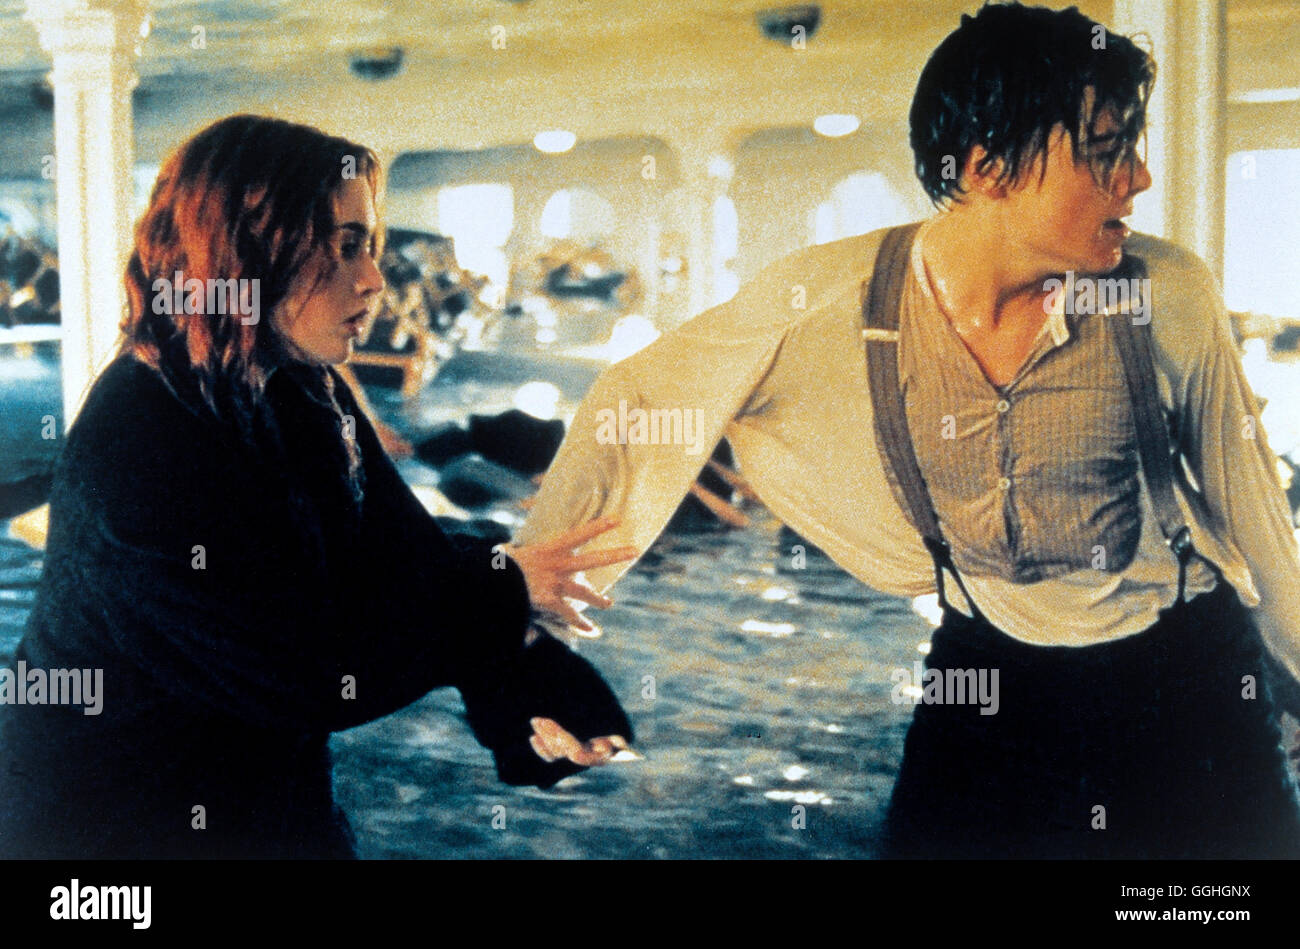 TITANIC / Titanic USA 1997 / James Cameron Szene mit Kate Winslet (Rose) und Leonardo Di Caprio (Jack). Regie: James Cameron aka. Titanic Foto Stock